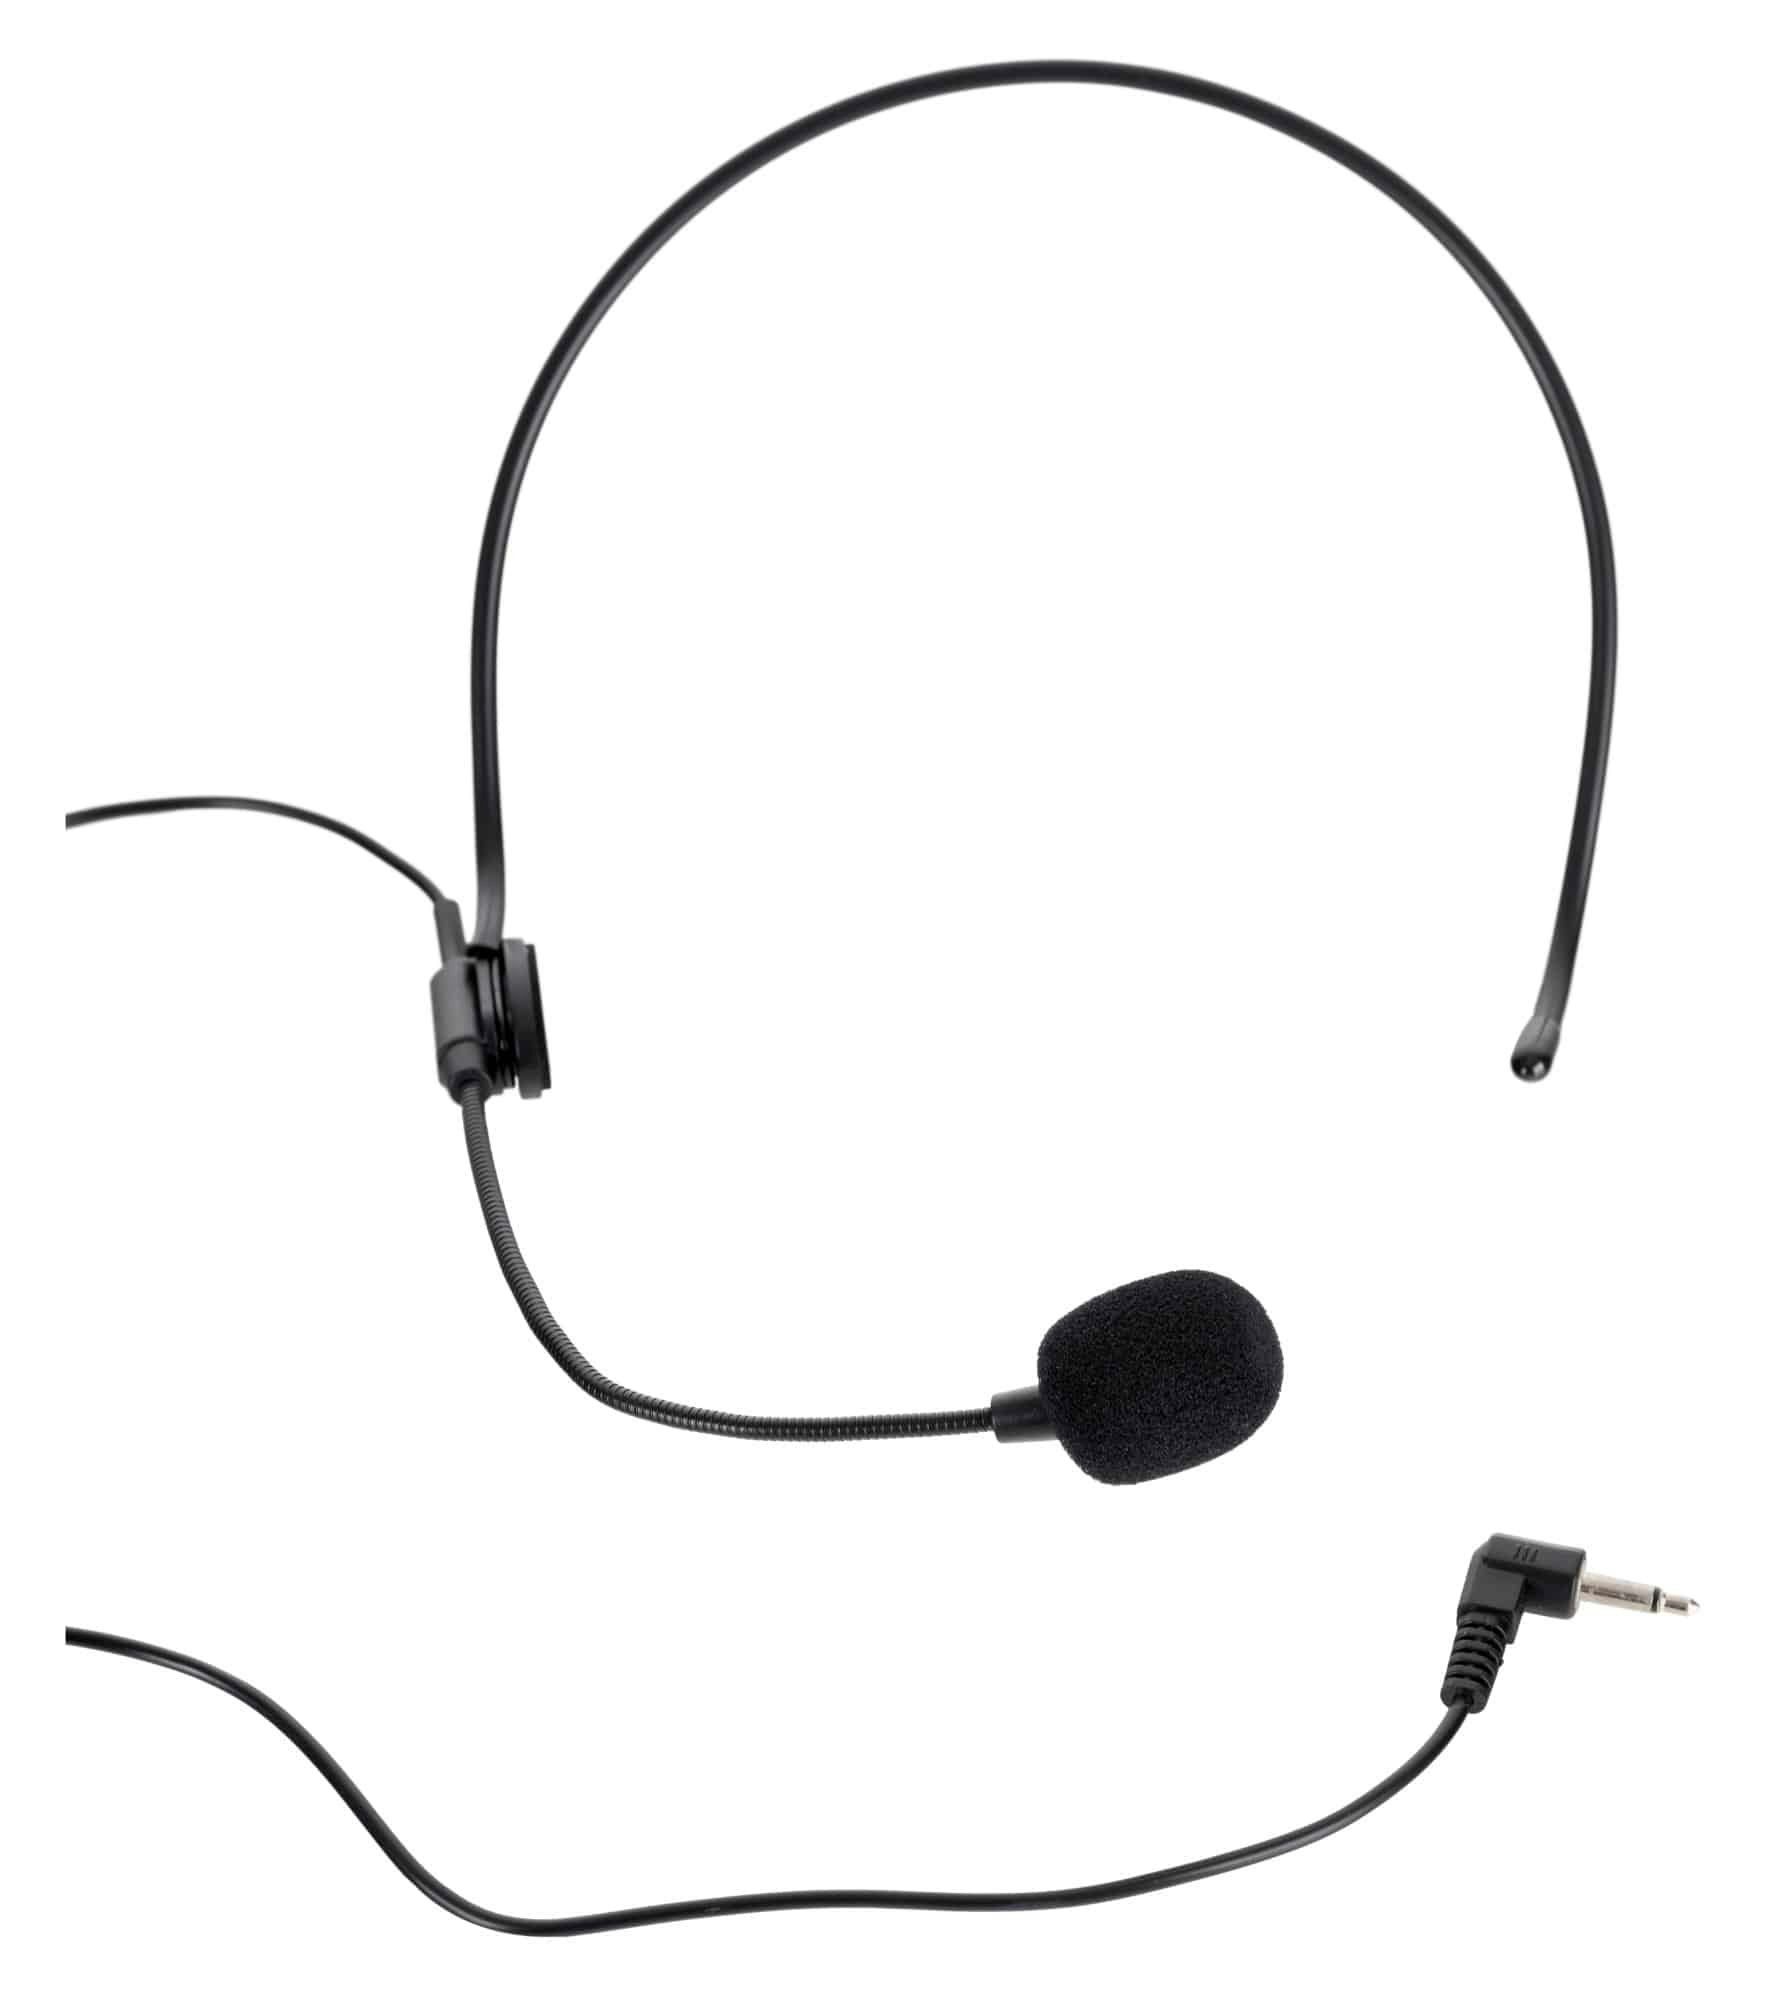 Mikrofon Guide Kugelcharakteristik) Silent-Guide-Sender, Funk-Kopfhörer Mikrofon Mikrofon mit (Leichtes Beatfoxx Silent verstellbares Headset für SDH-100